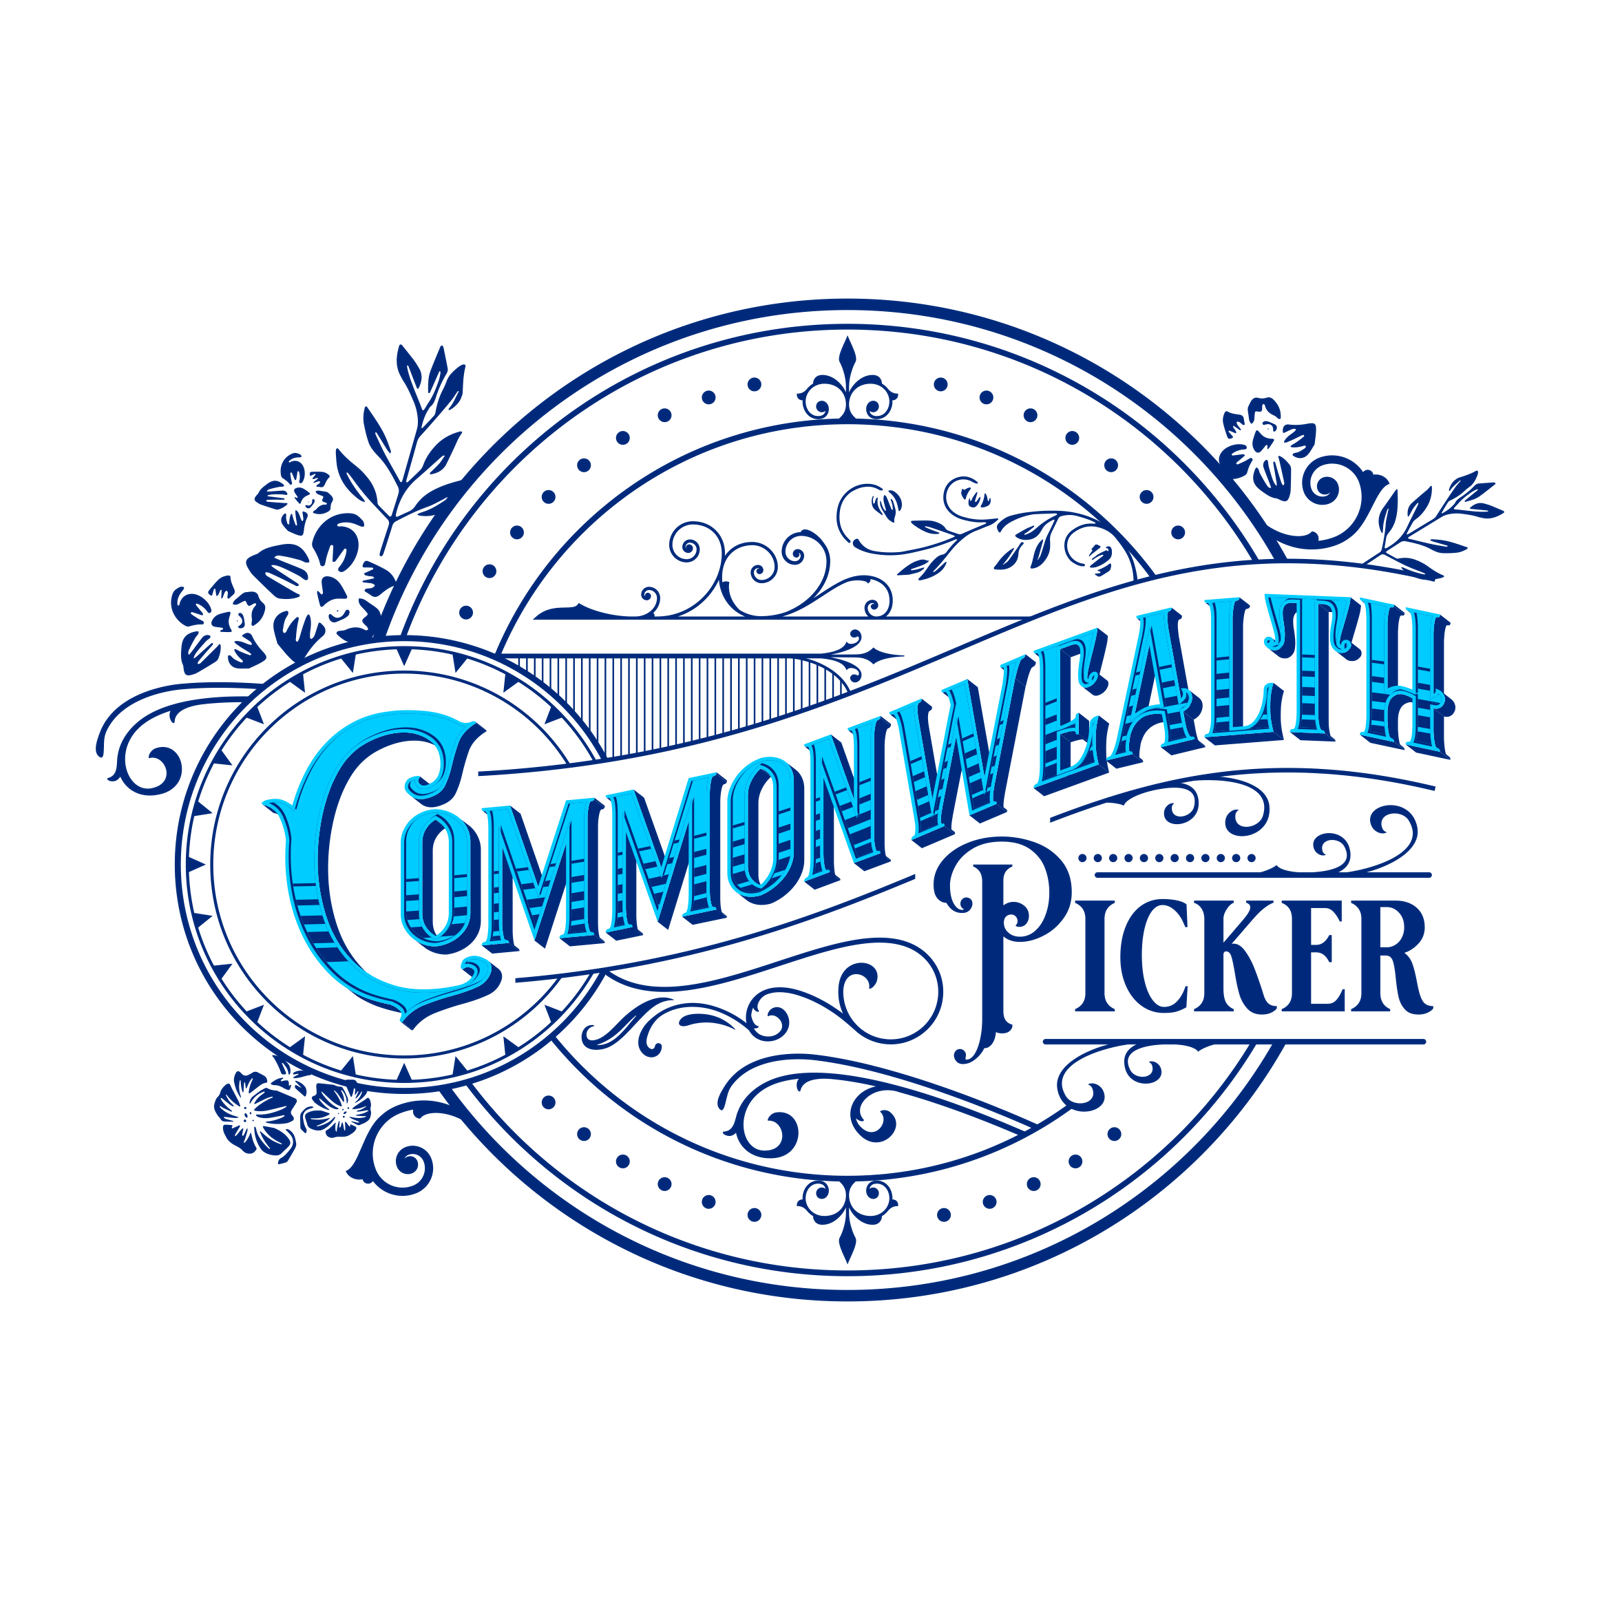 Commonwealthpicker's account image